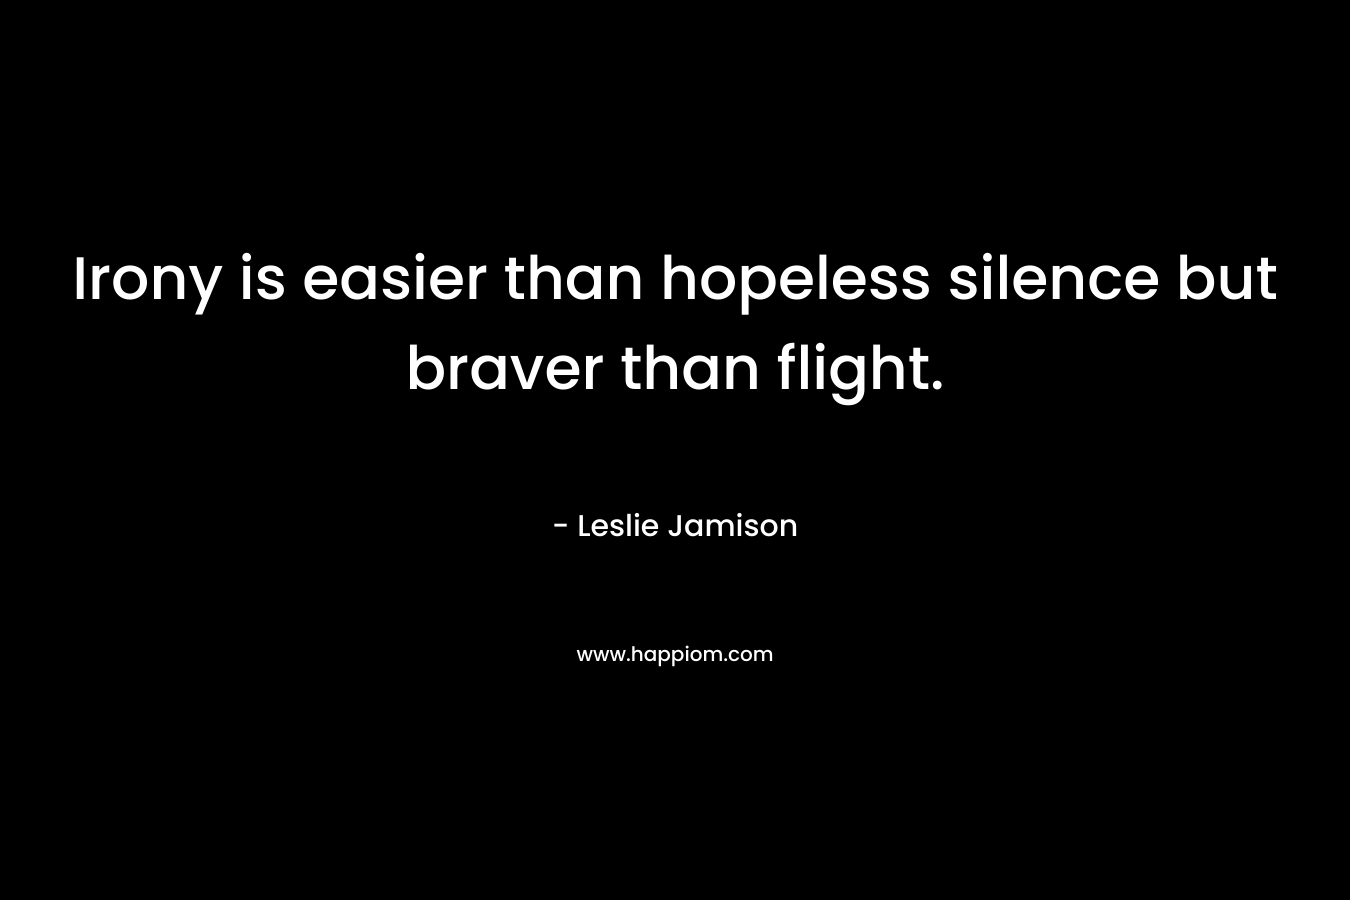 Irony is easier than hopeless silence but braver than flight.